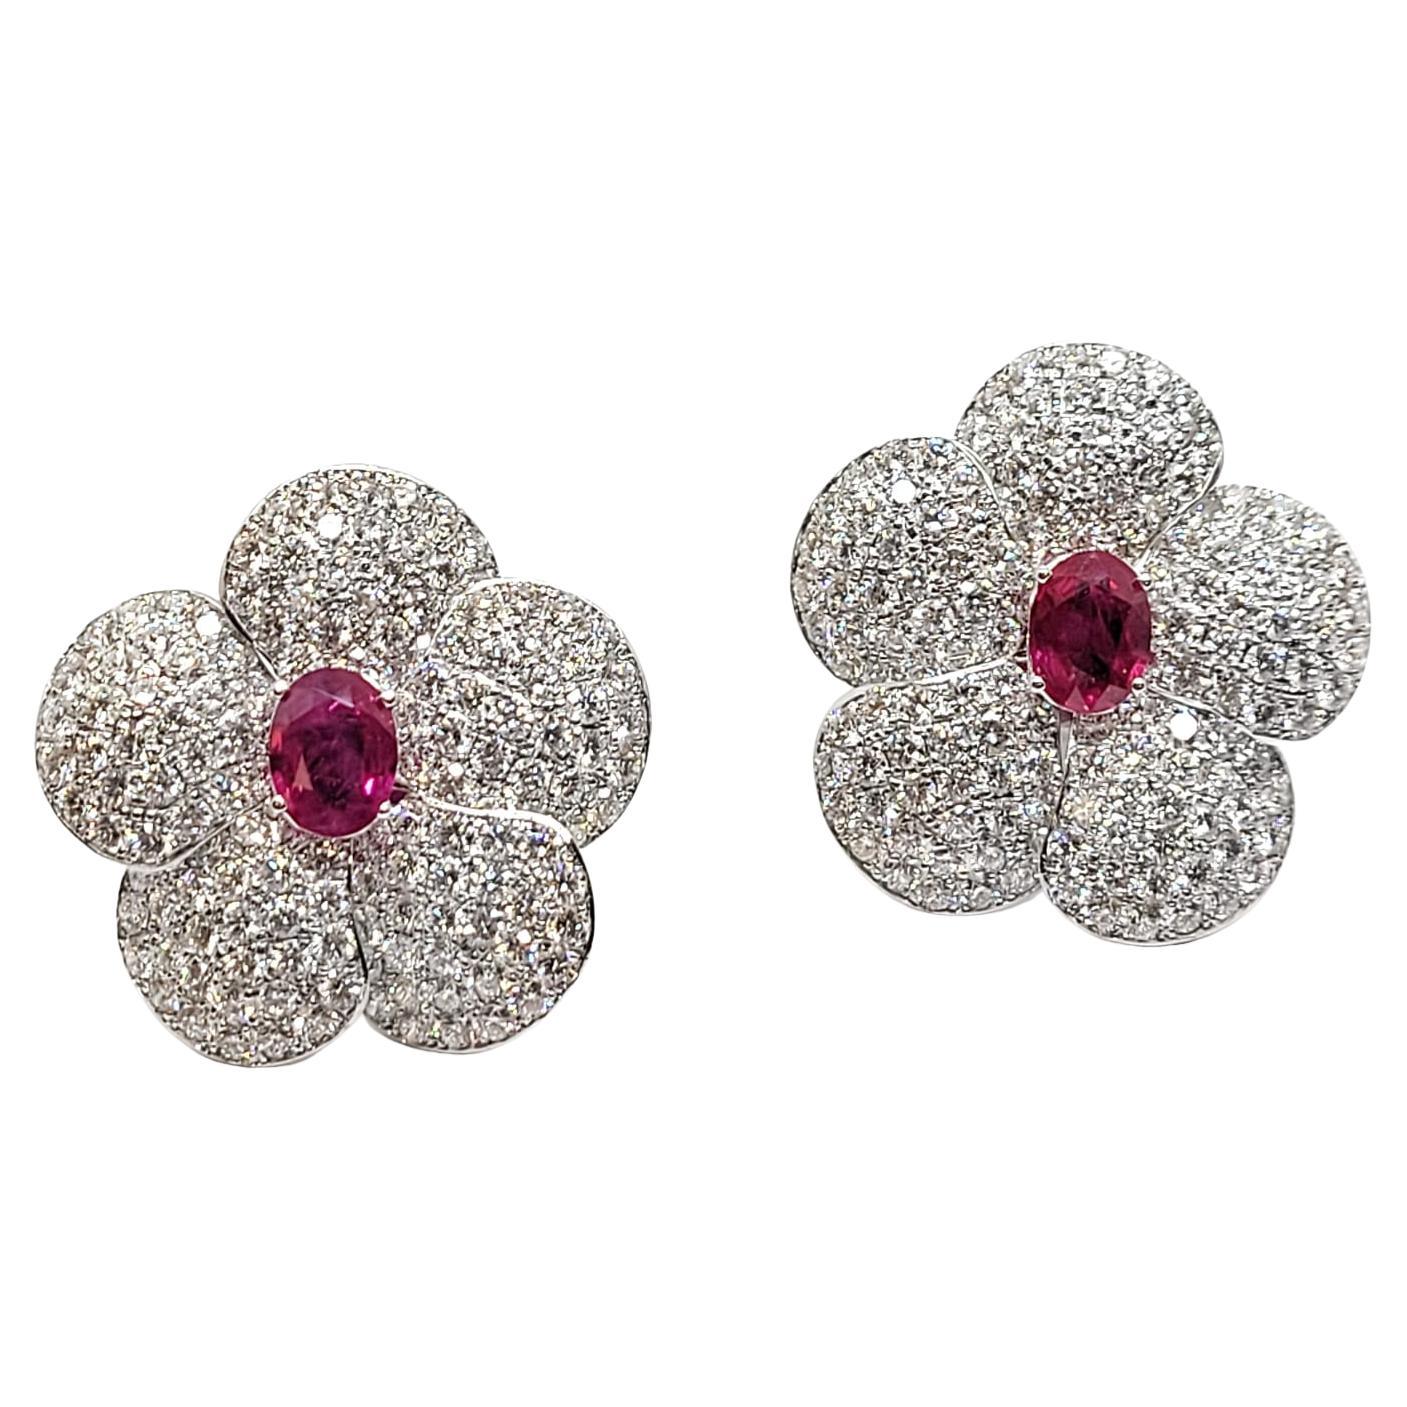 Andreoli 2.32 Carat Ruby Diamond 18k White Gold Flower Earrings CDC Certified For Sale